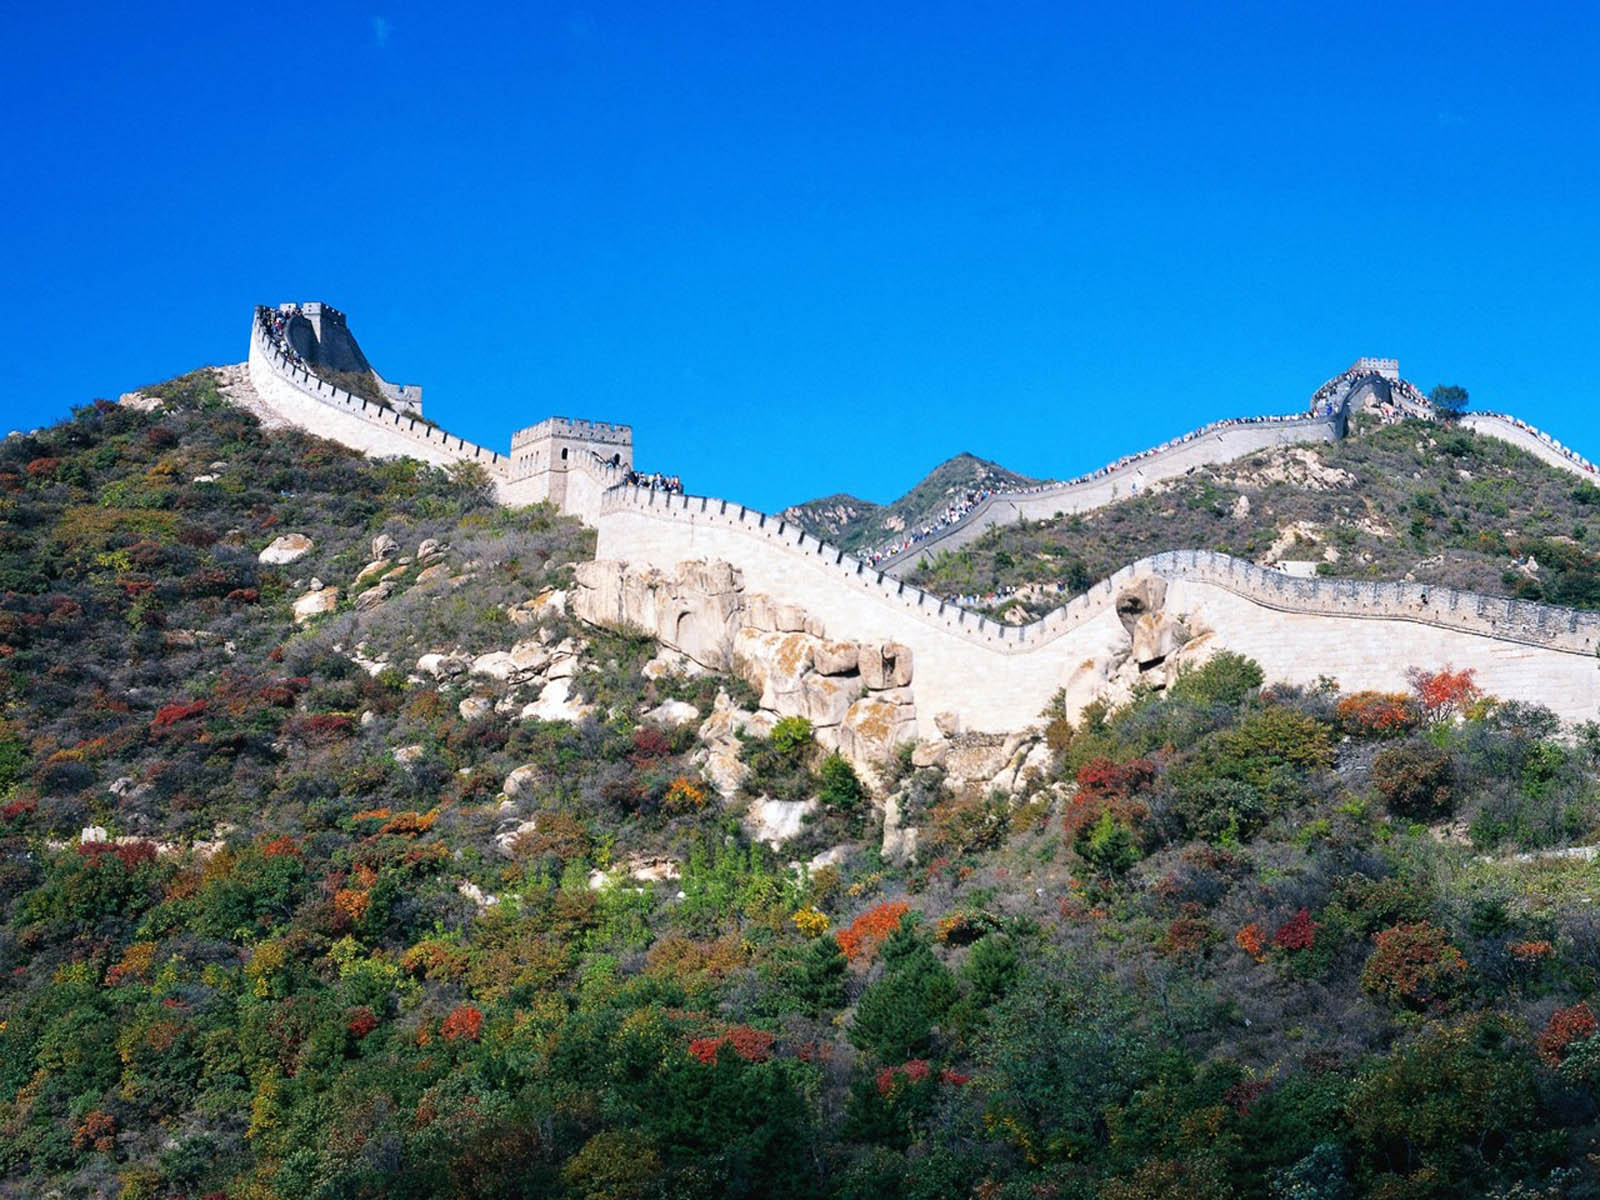 Wallpapers Great Wall Of China Wallpapers Afalchi Free images wallpape [afalchi.blogspot.com]